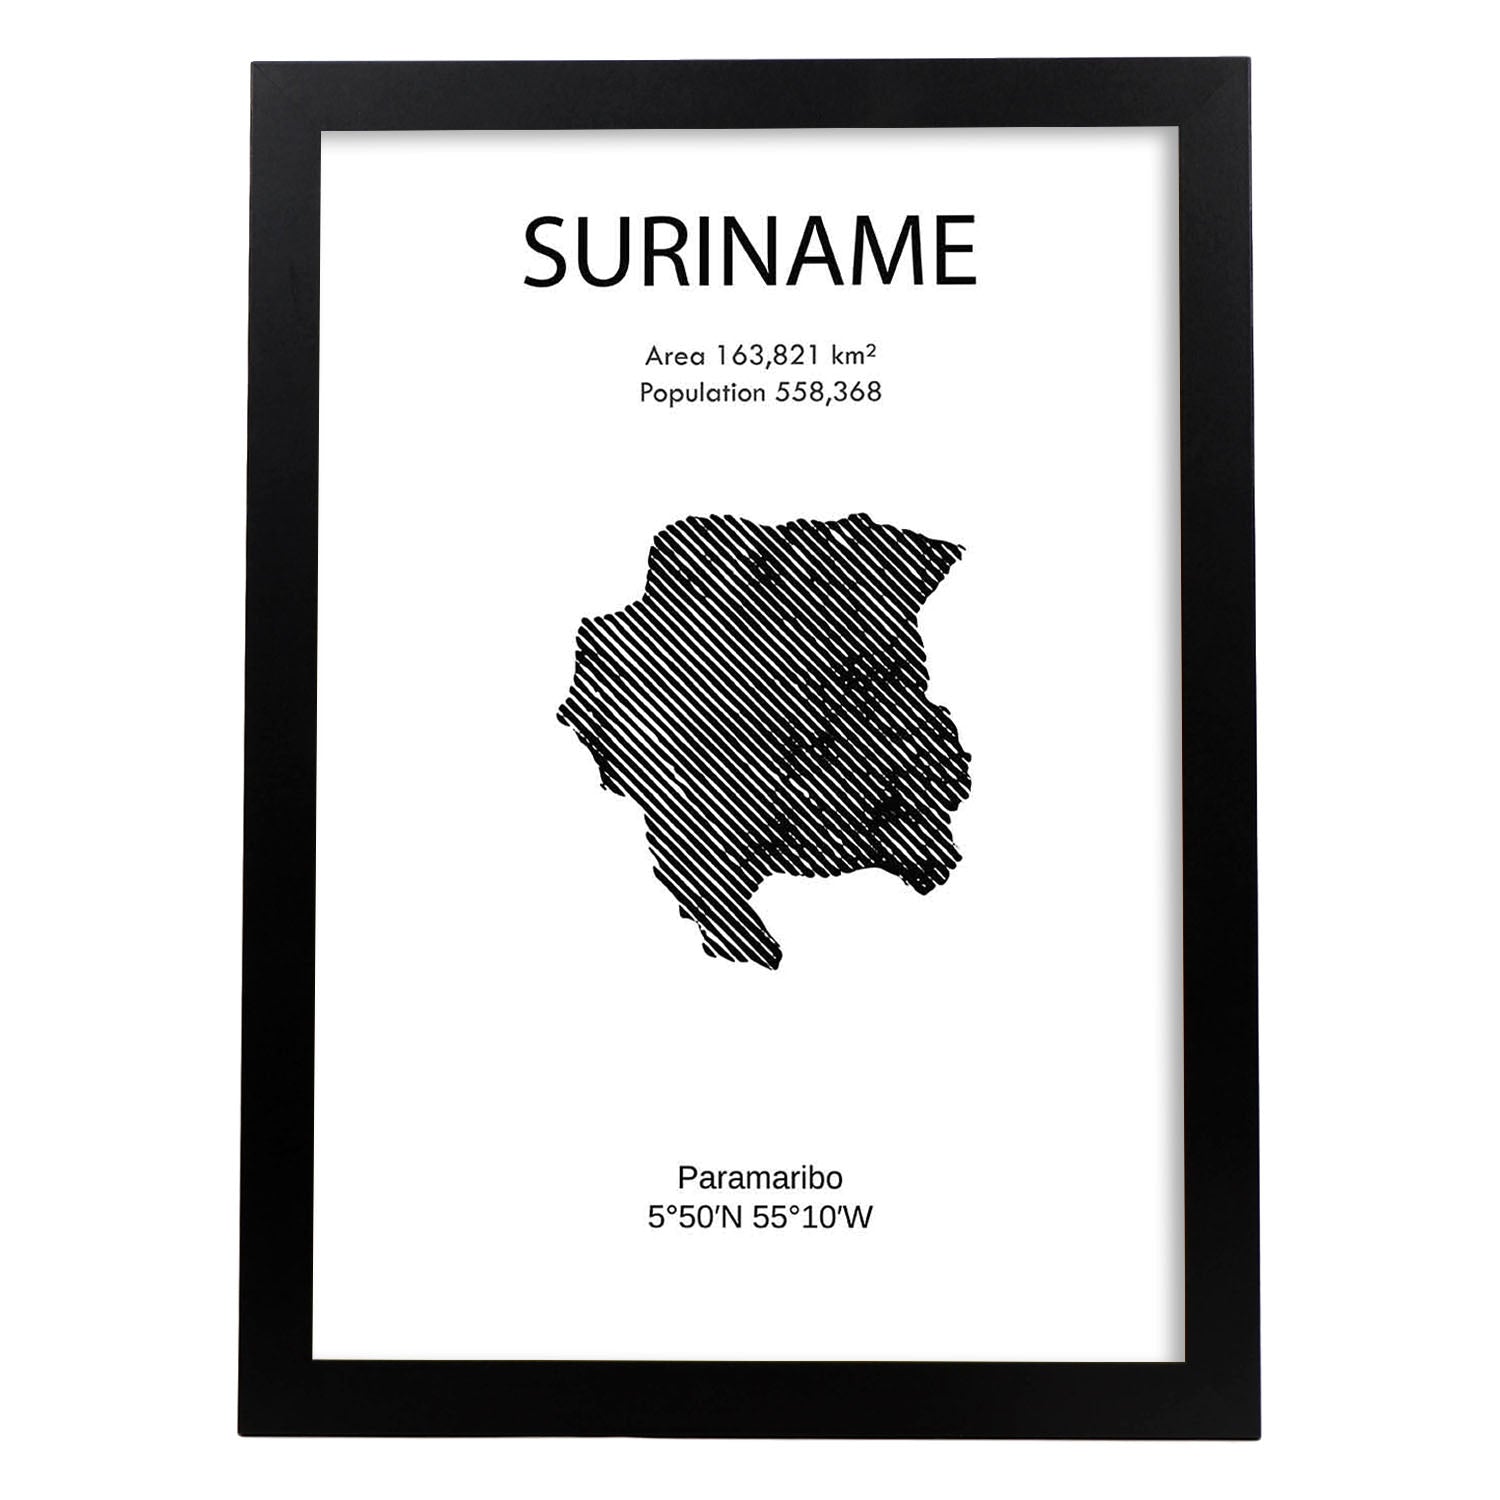 Poster de Surinam. Láminas de paises y continentes del mundo.-Artwork-Nacnic-A3-Marco Negro-Nacnic Estudio SL